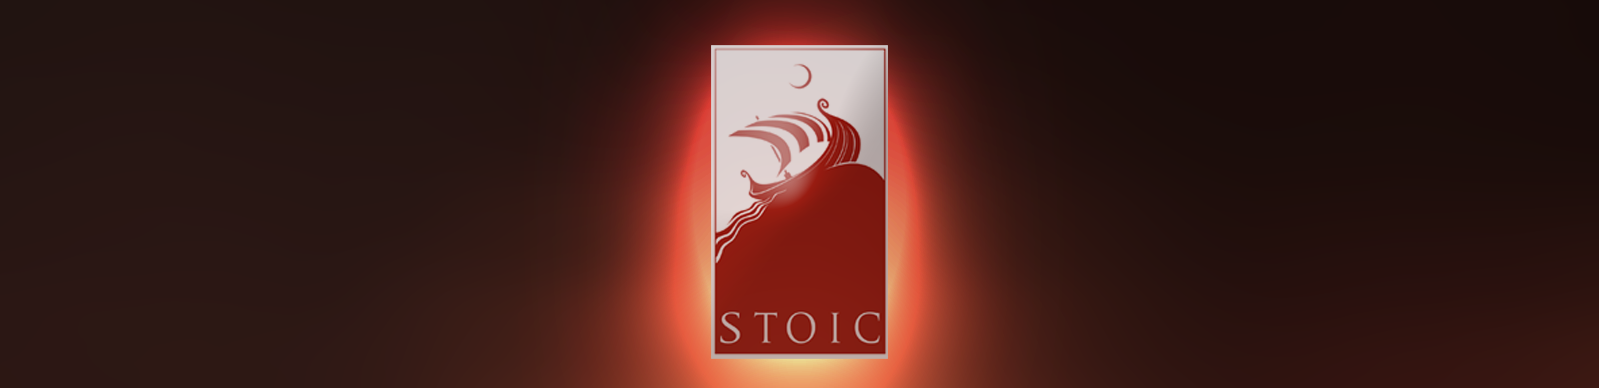 Stoic Announces Partnership with Versus Evil